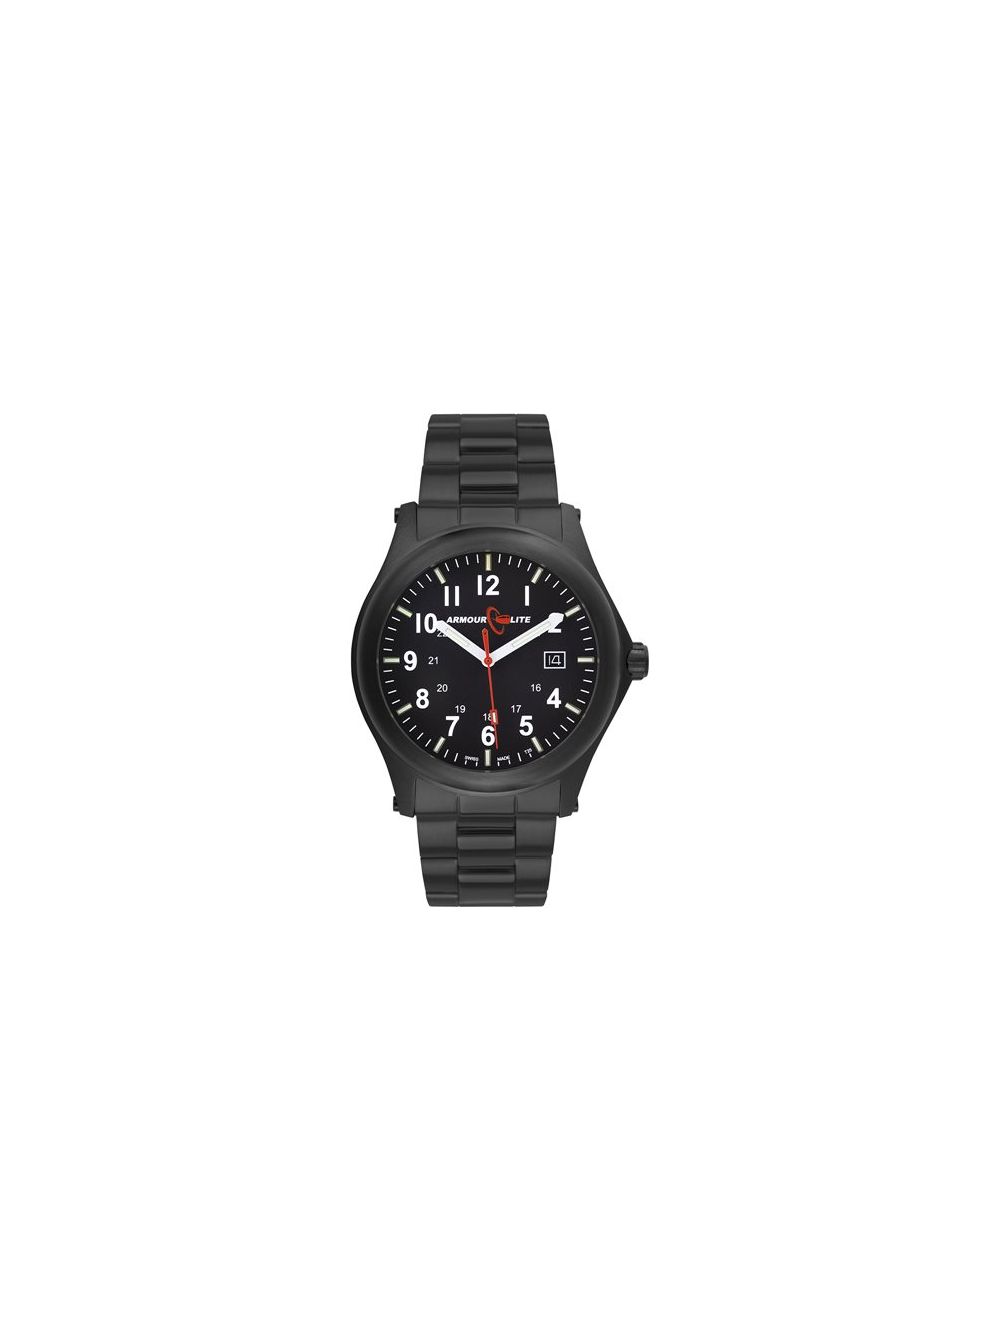 ArmourLite Trailblazer Swiss Tritium Illuminated Watch